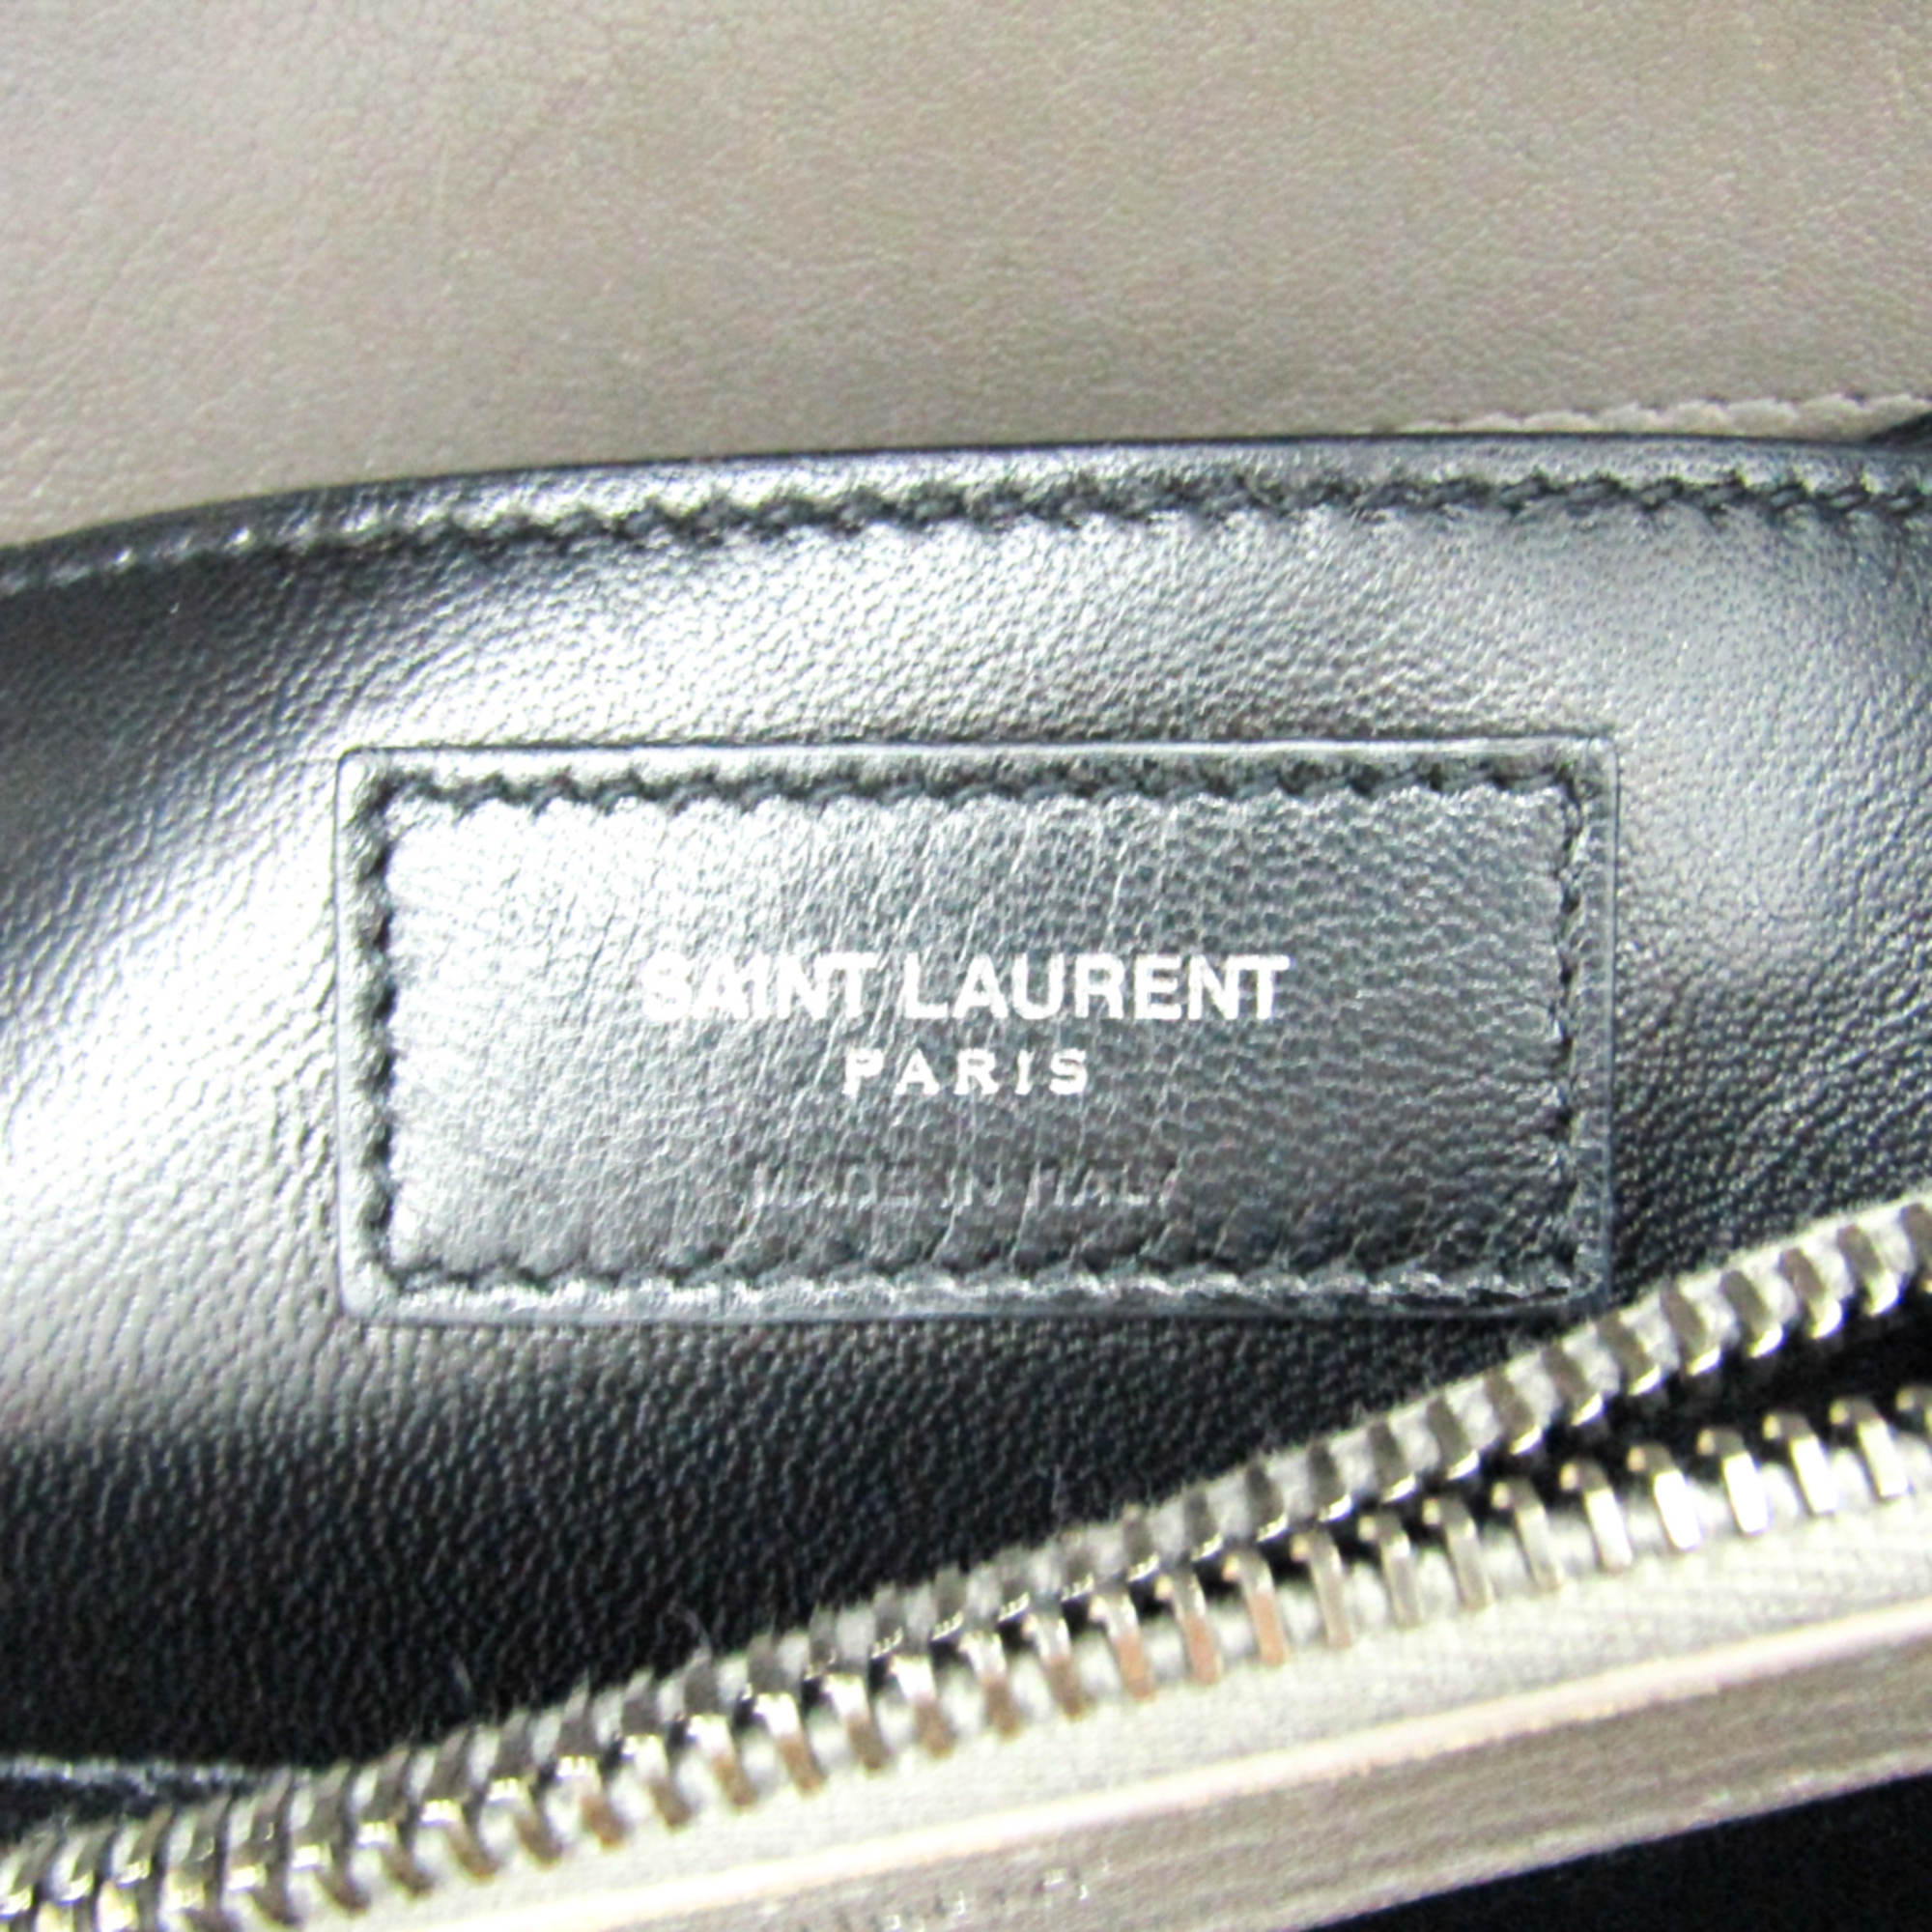 Saint Laurent Classic Monogram Saint Laurent Colleige 428056 Women's Leather Handbag Gray